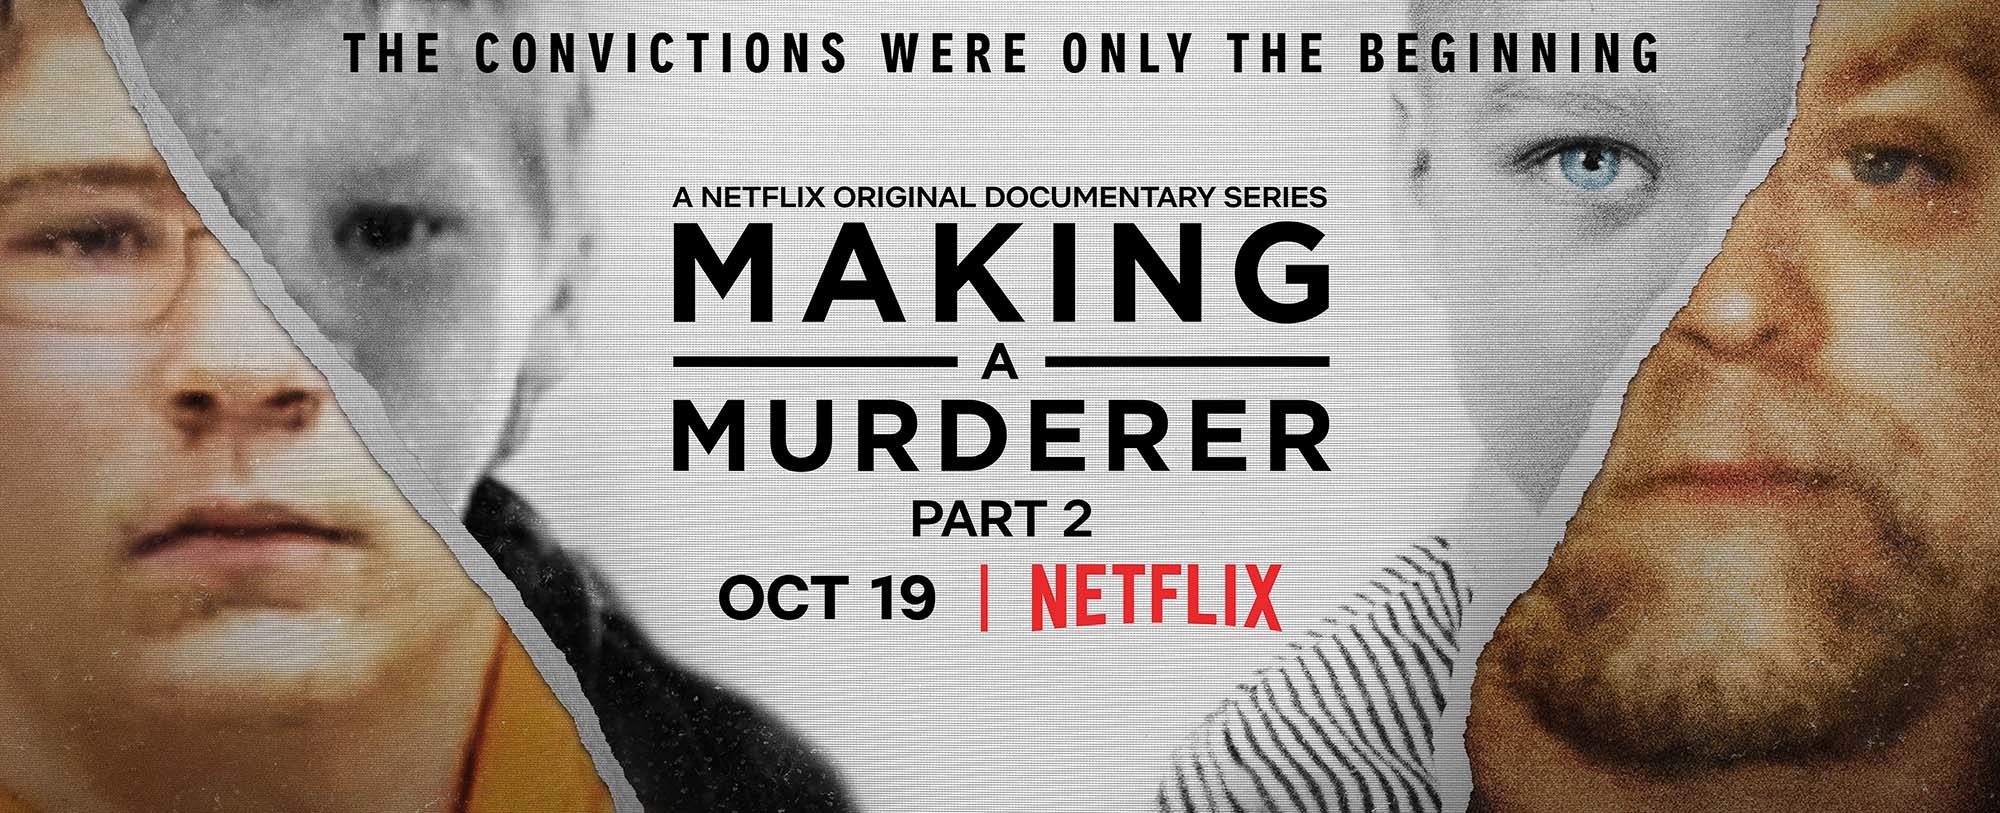 Mega Sized TV Poster Image for Making a Murderer (#3 of 3)